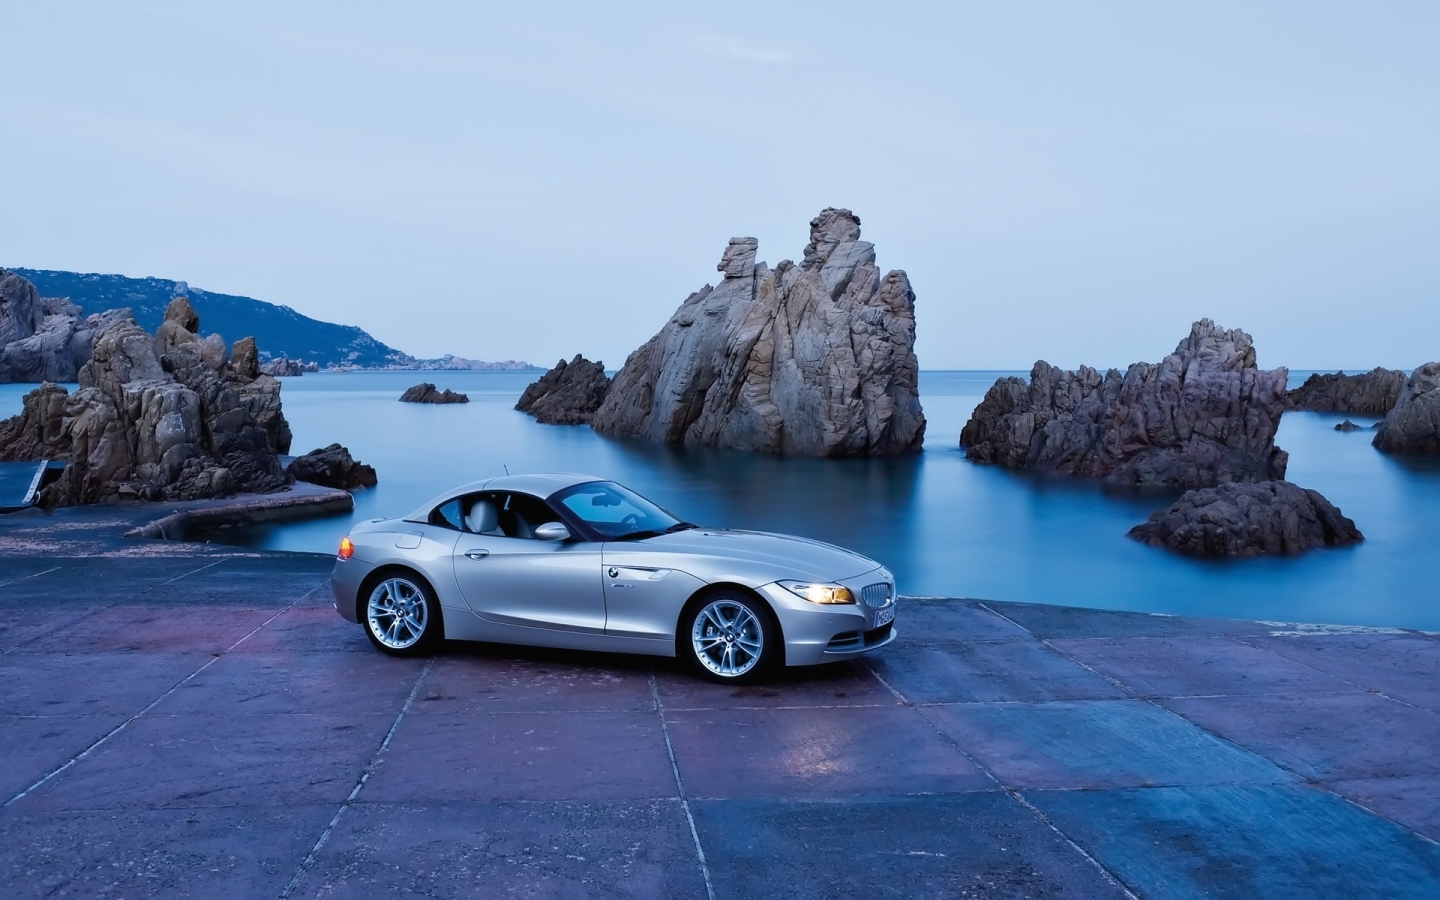 BMW Z4 Roadster Seashore 2009 for 1440 x 900 widescreen resolution